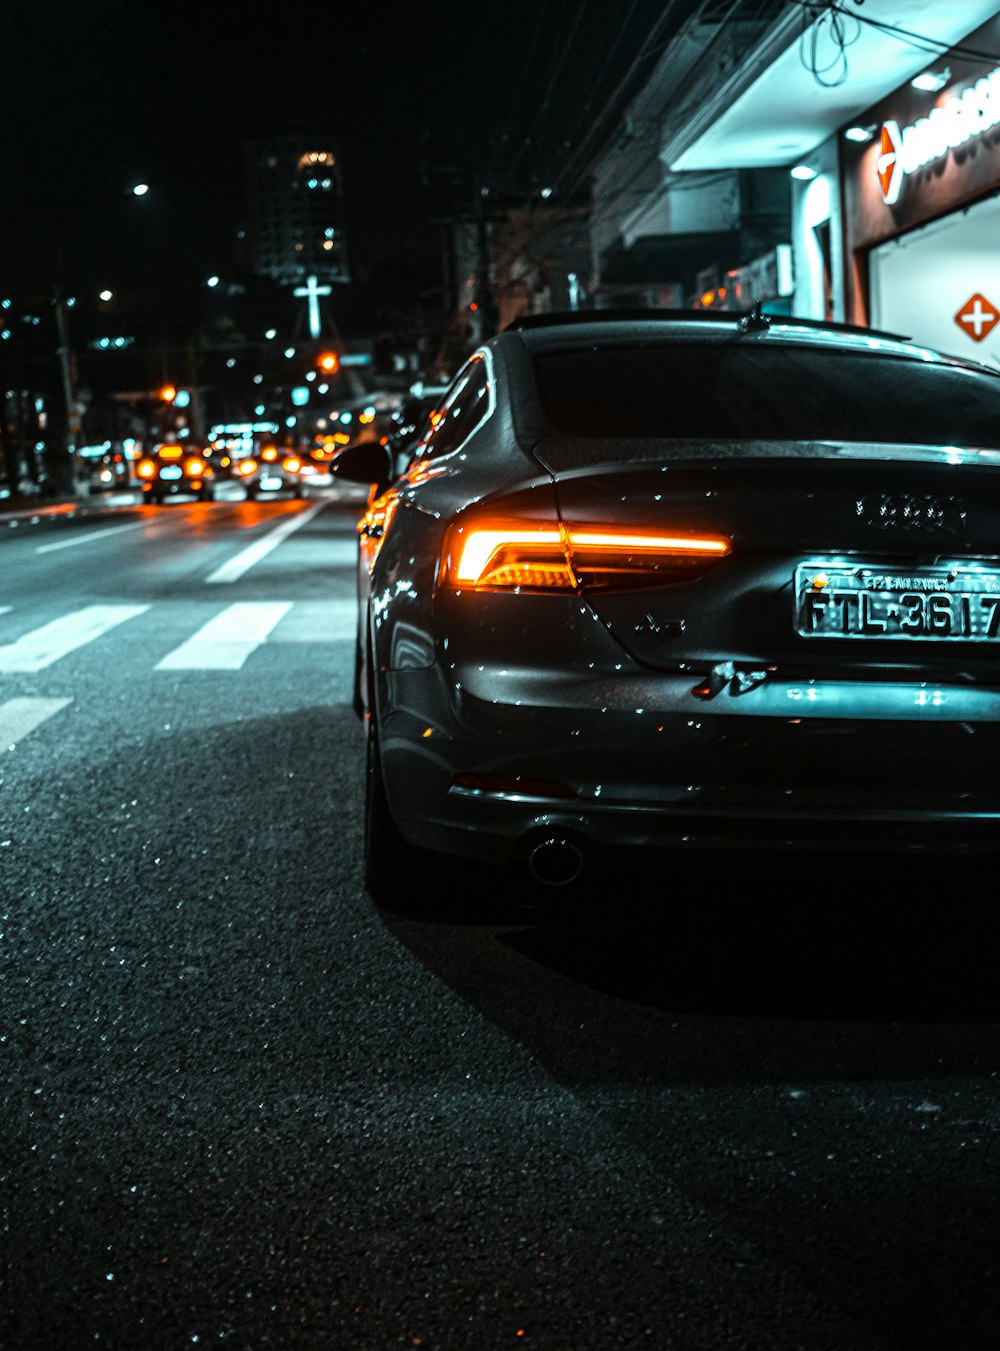 black honda car on road during night time